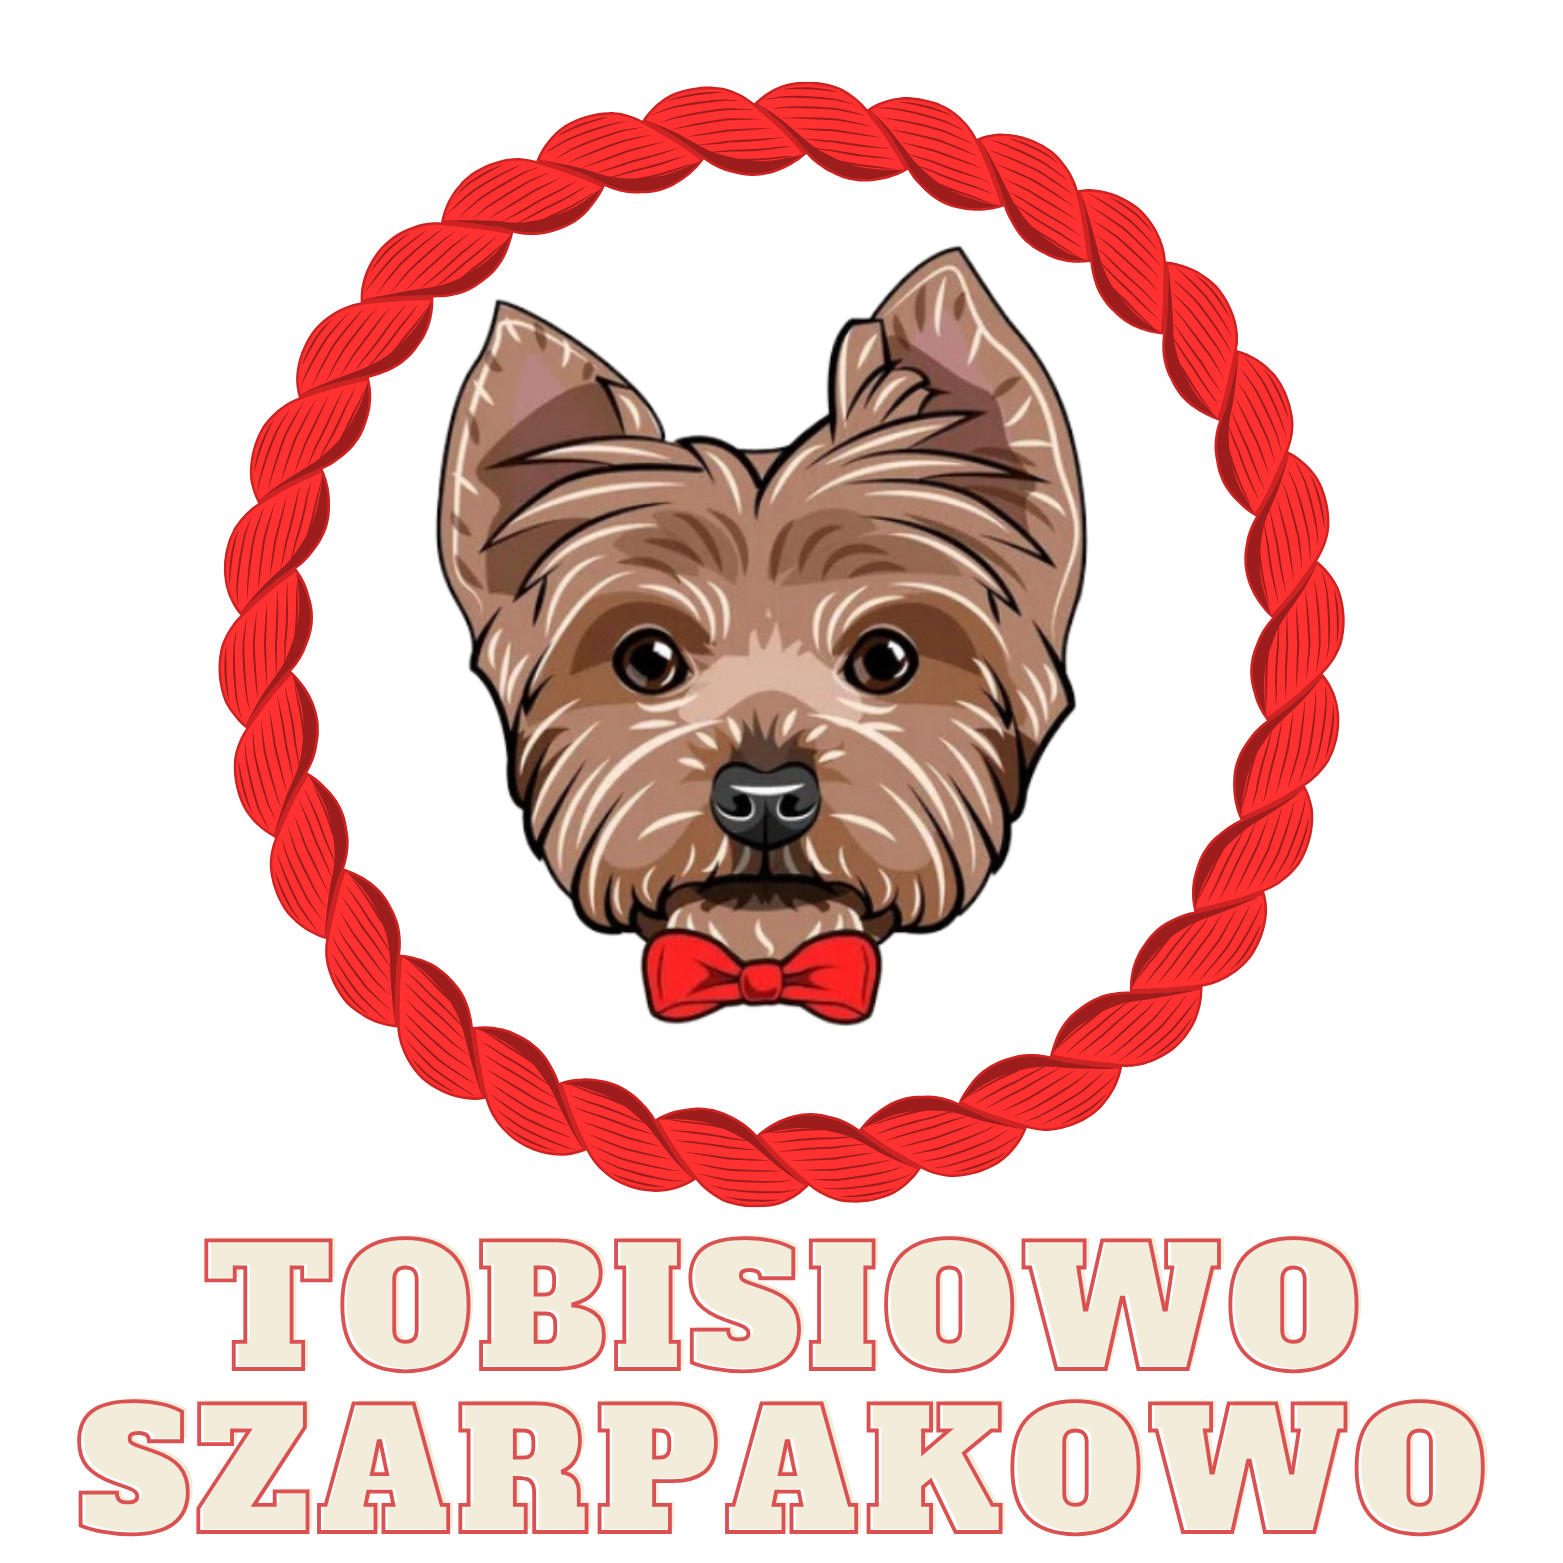  Tobisiowo Szarpakowko Handmade 